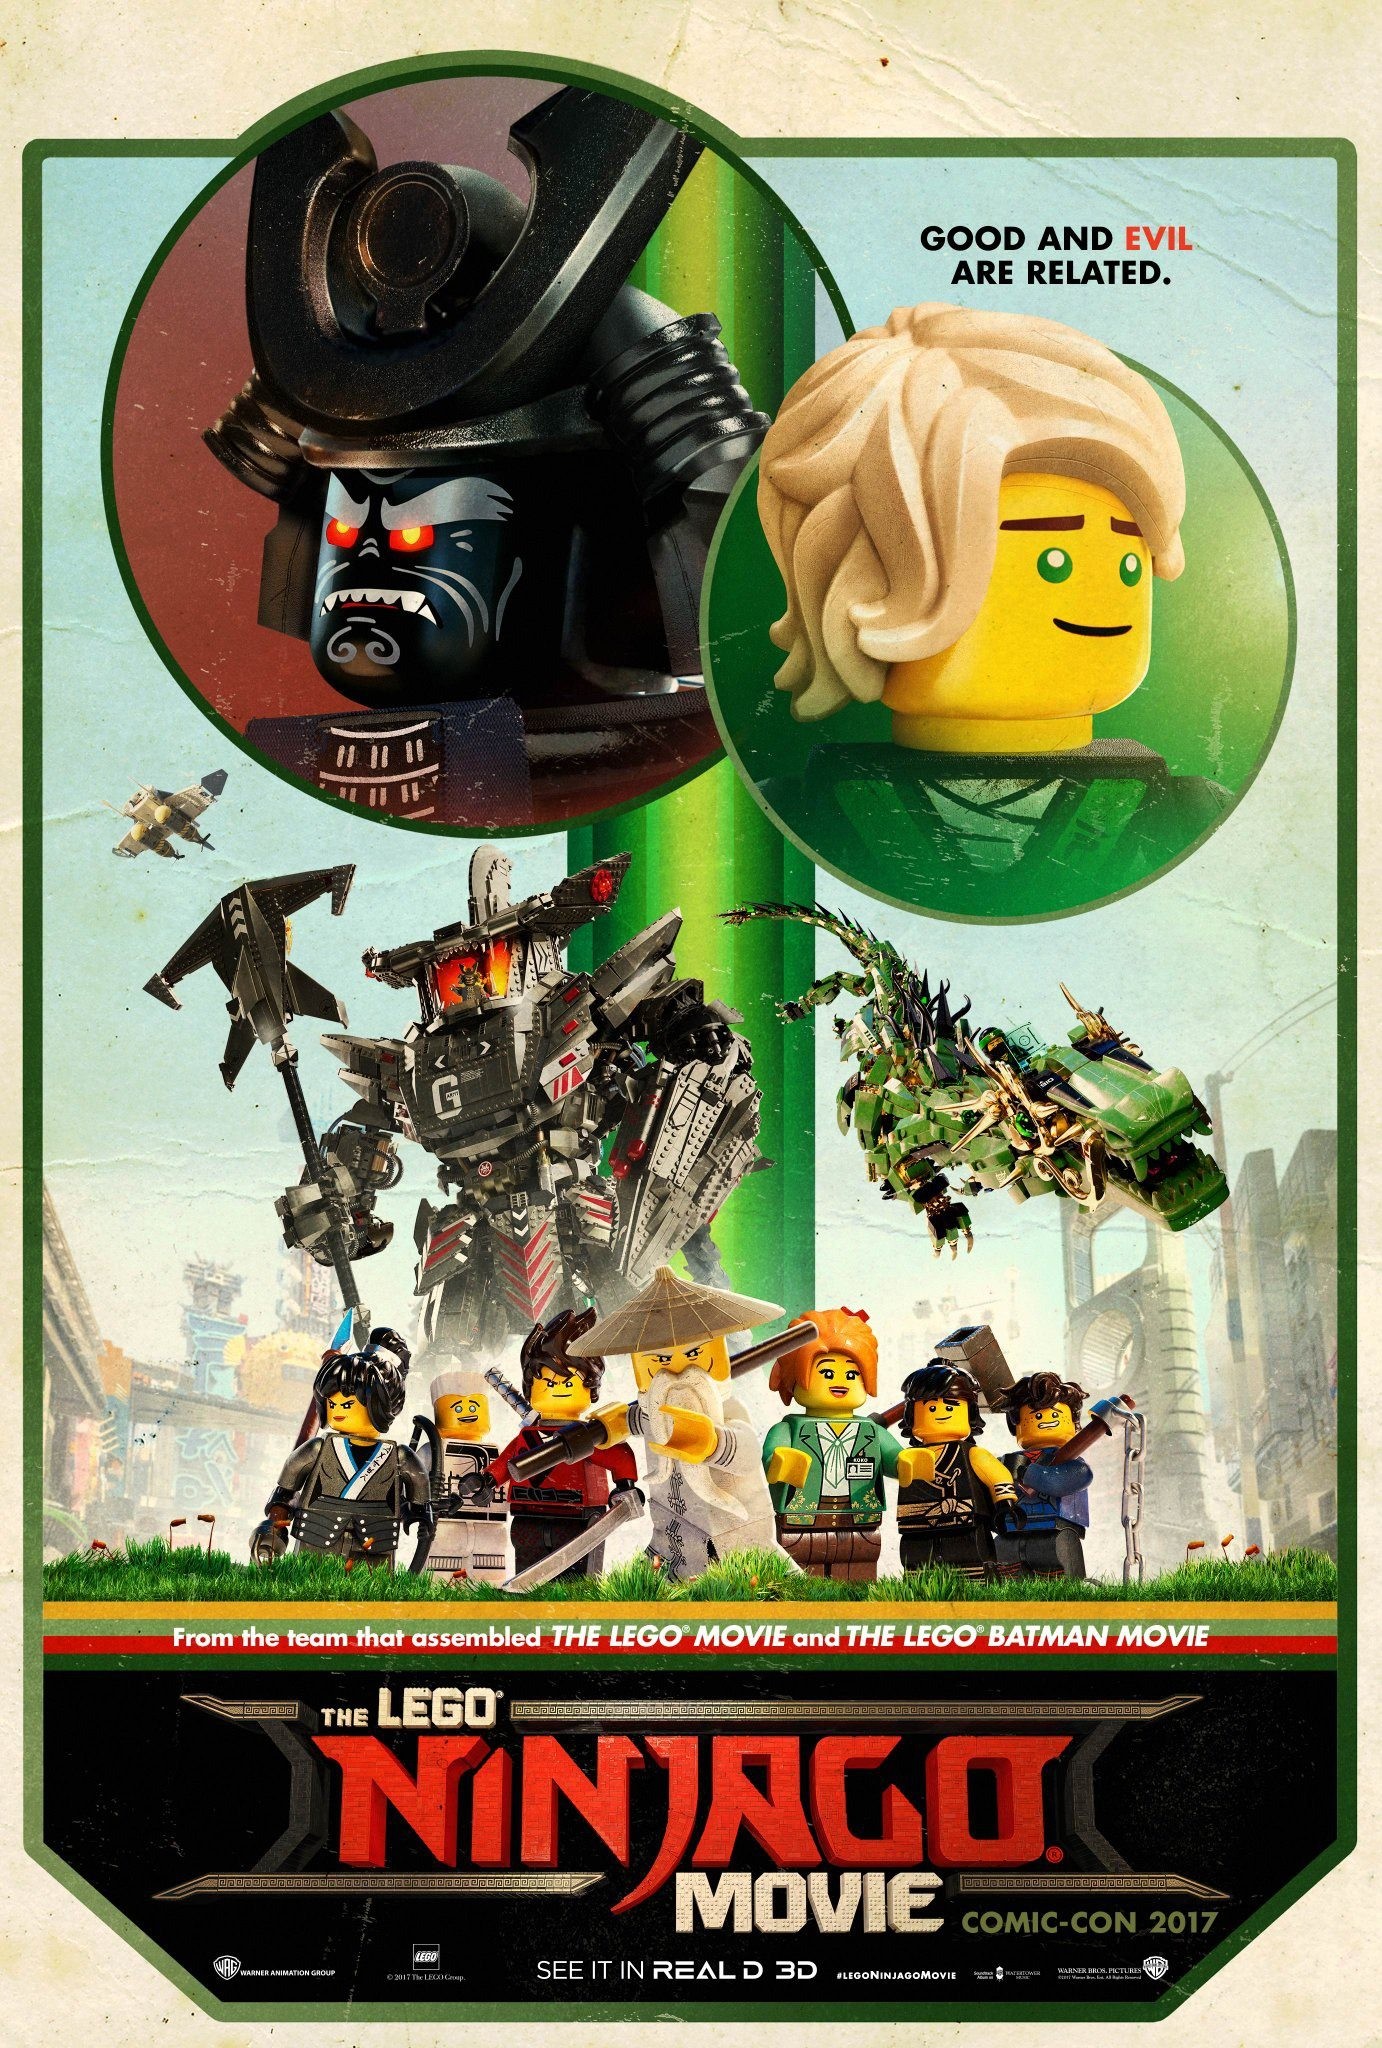 The Lego Ninjago Movie 2017 HD Wallpaper From Gallsource.com